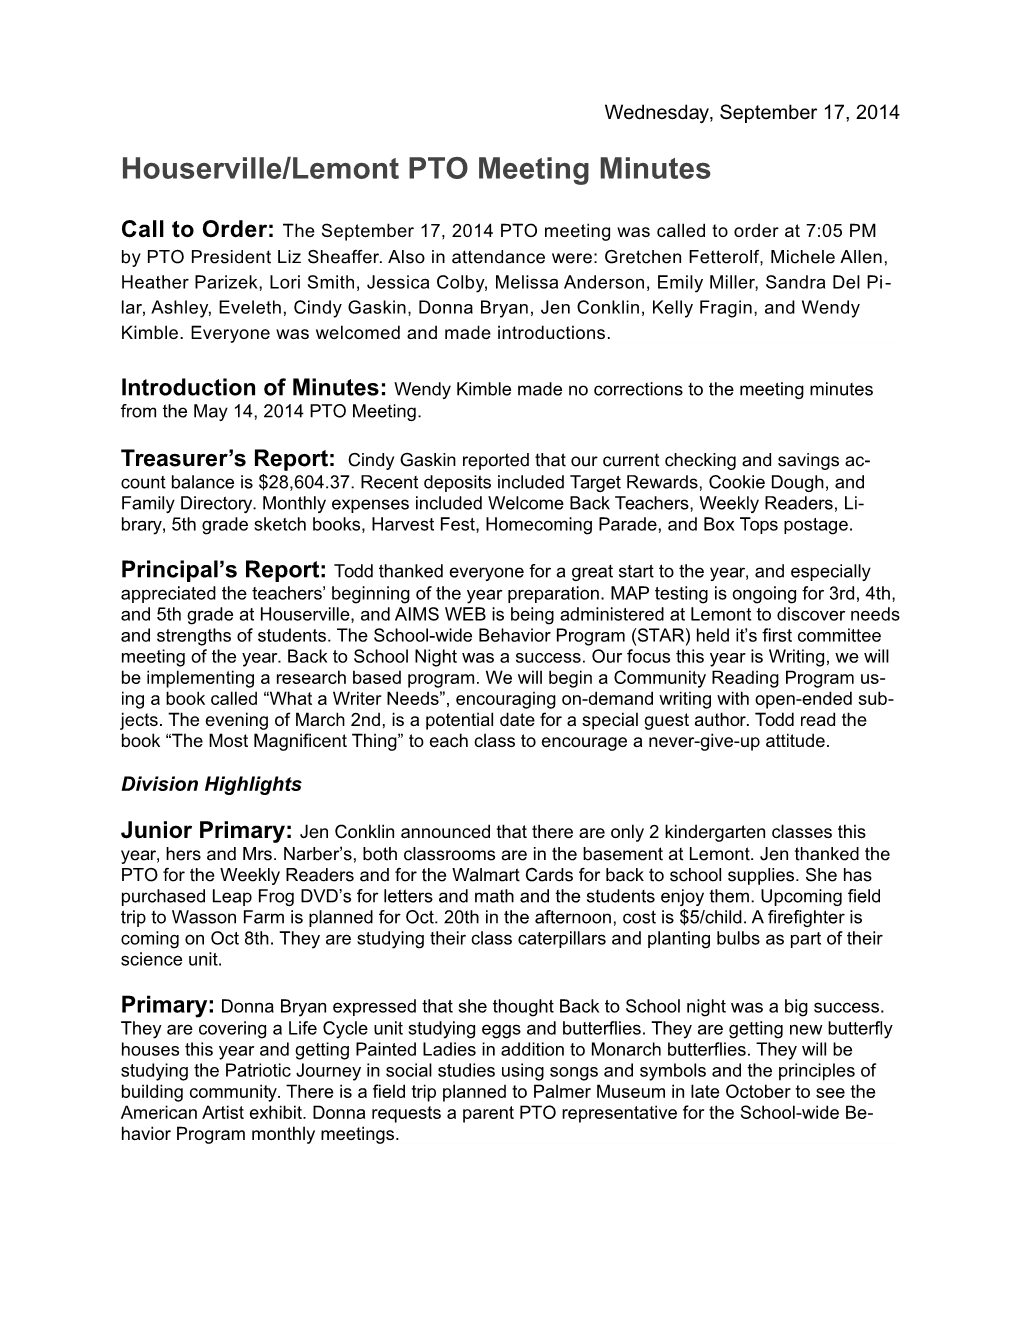 Houserville/Lemont PTO Meeting Minutes